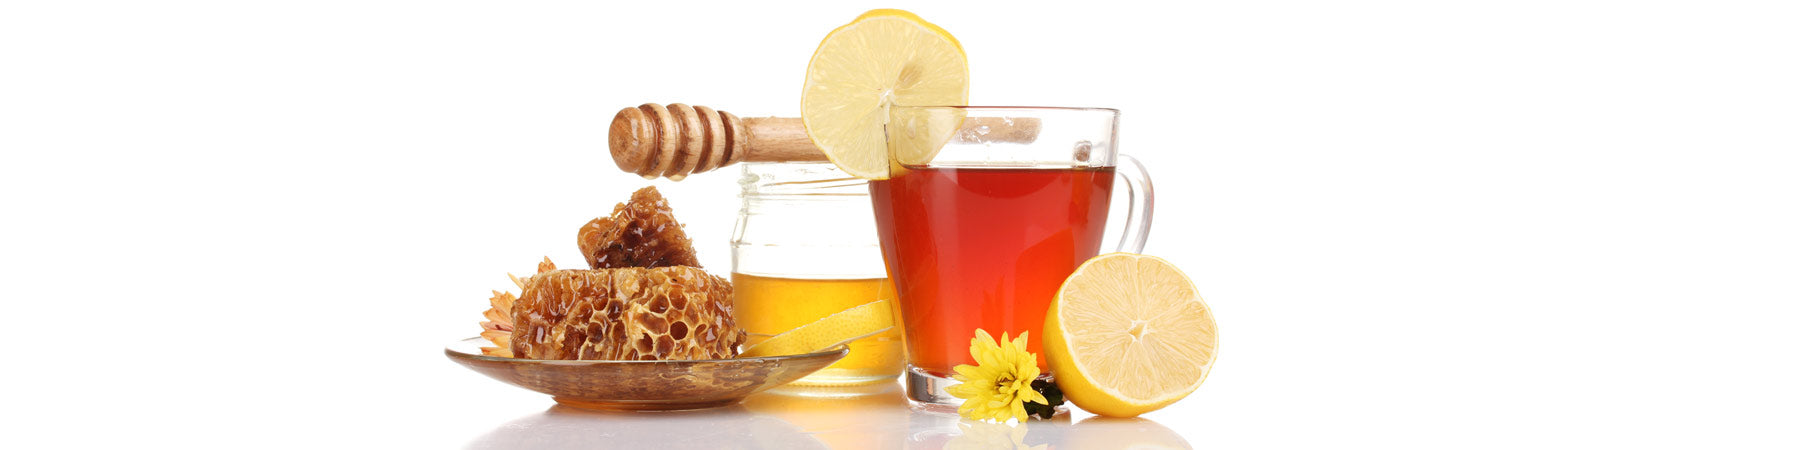 Natural Throat and Oral Health with Manuka Honey tea and lemon